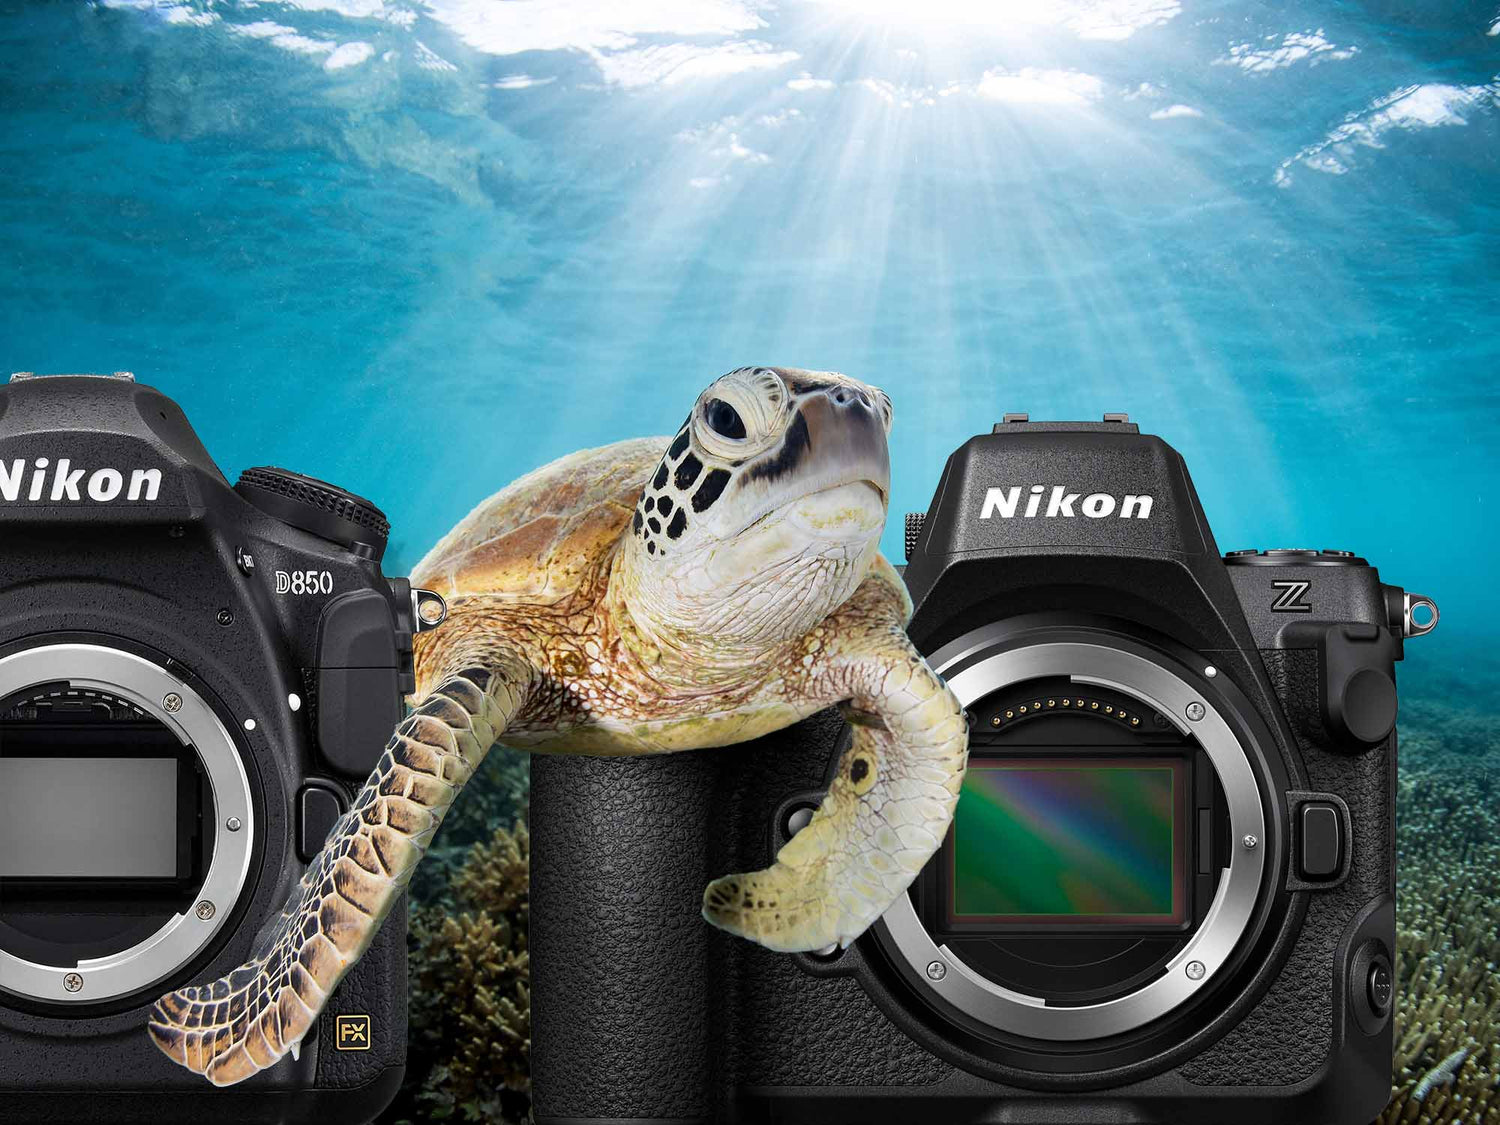 Nikon Coolpix A comparative review: Digital Photography Review